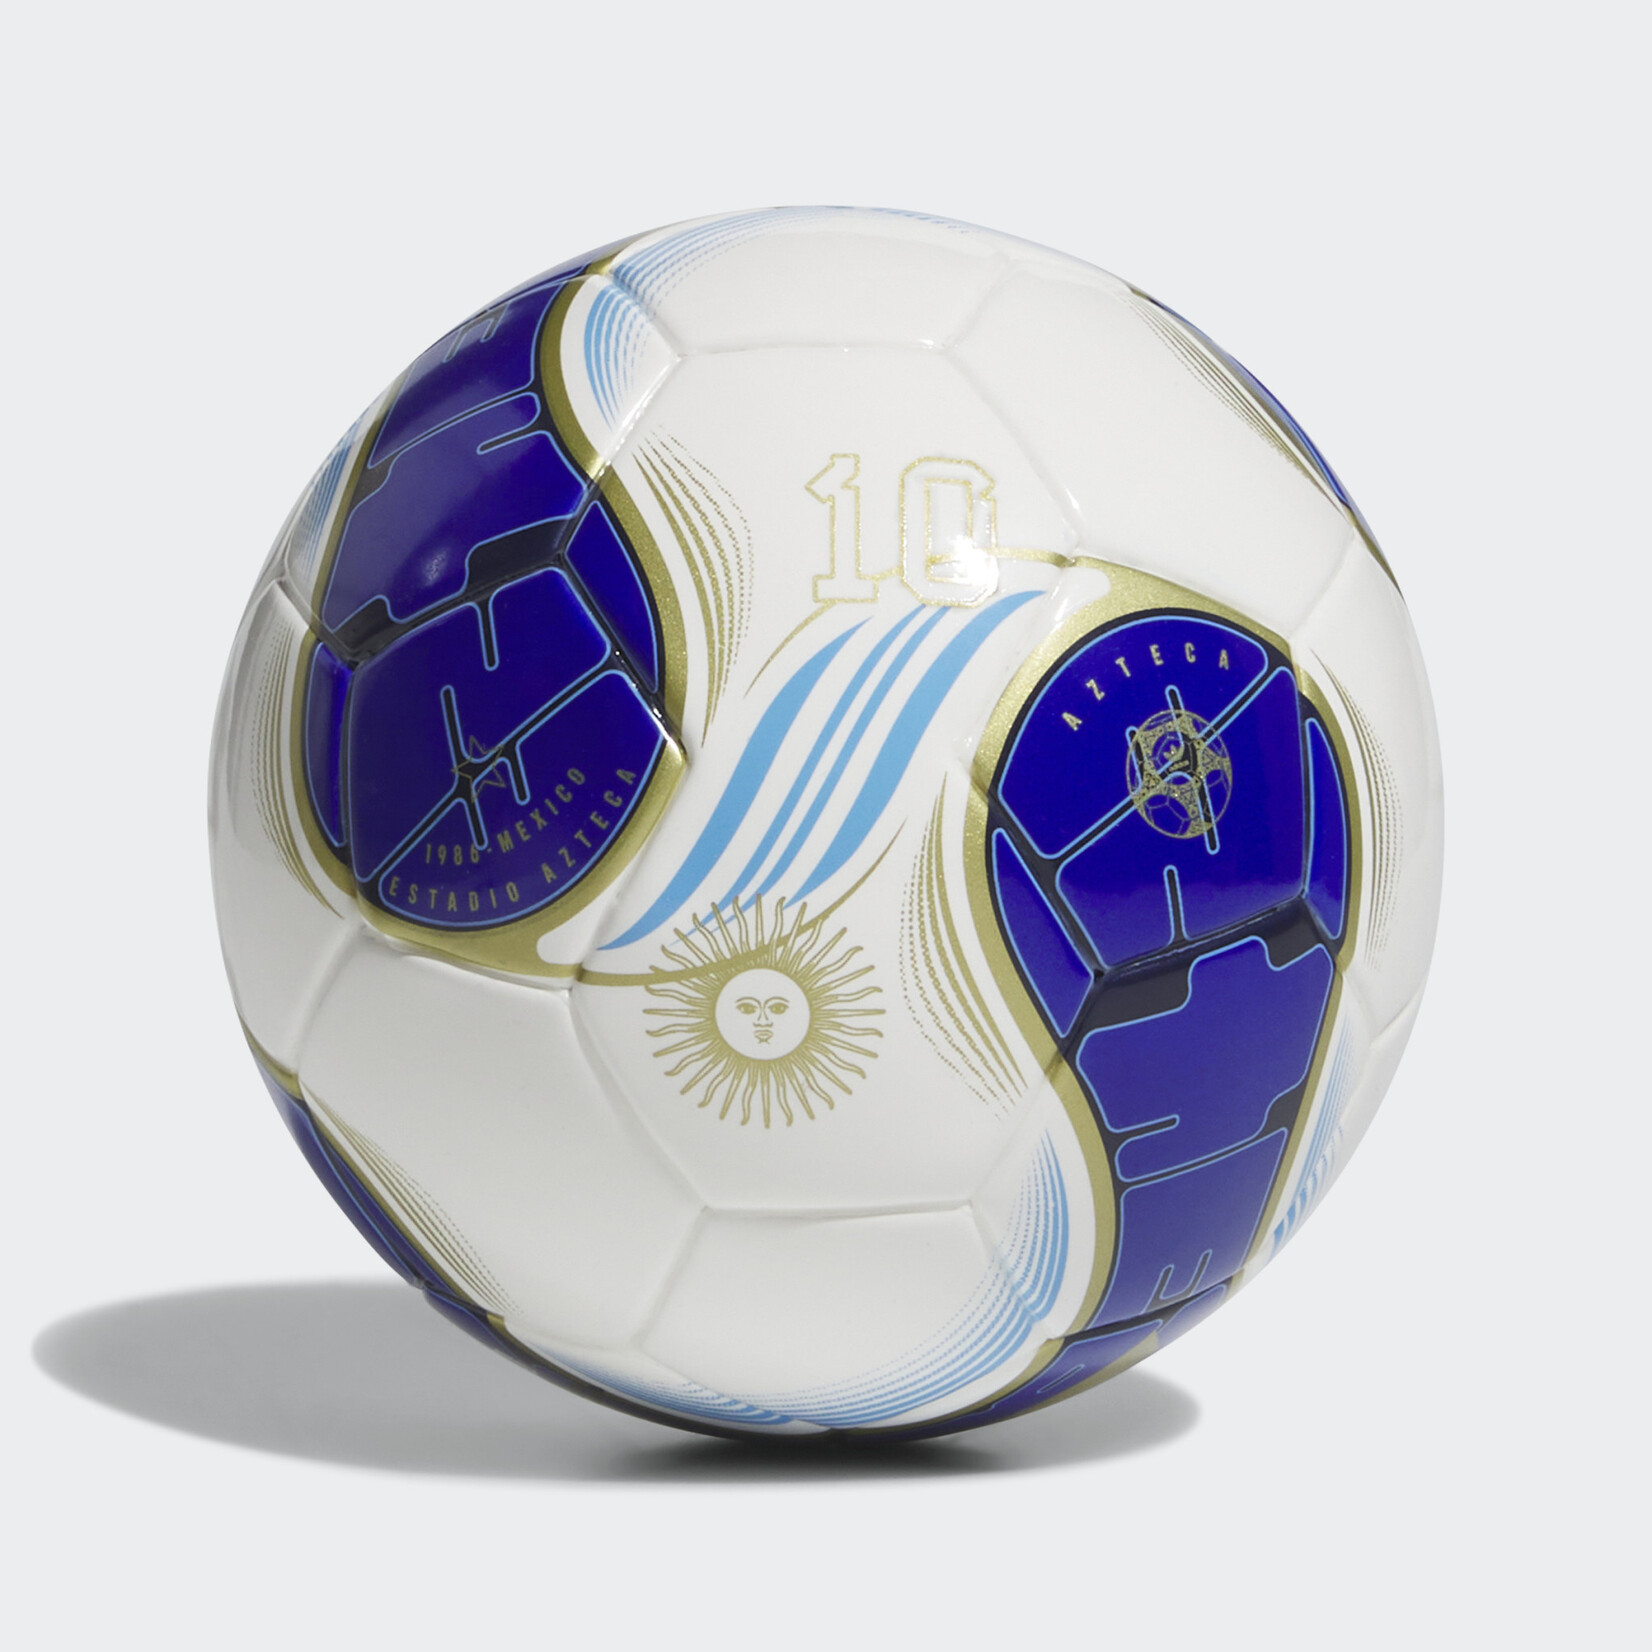 Adidas Messi Mini Ball